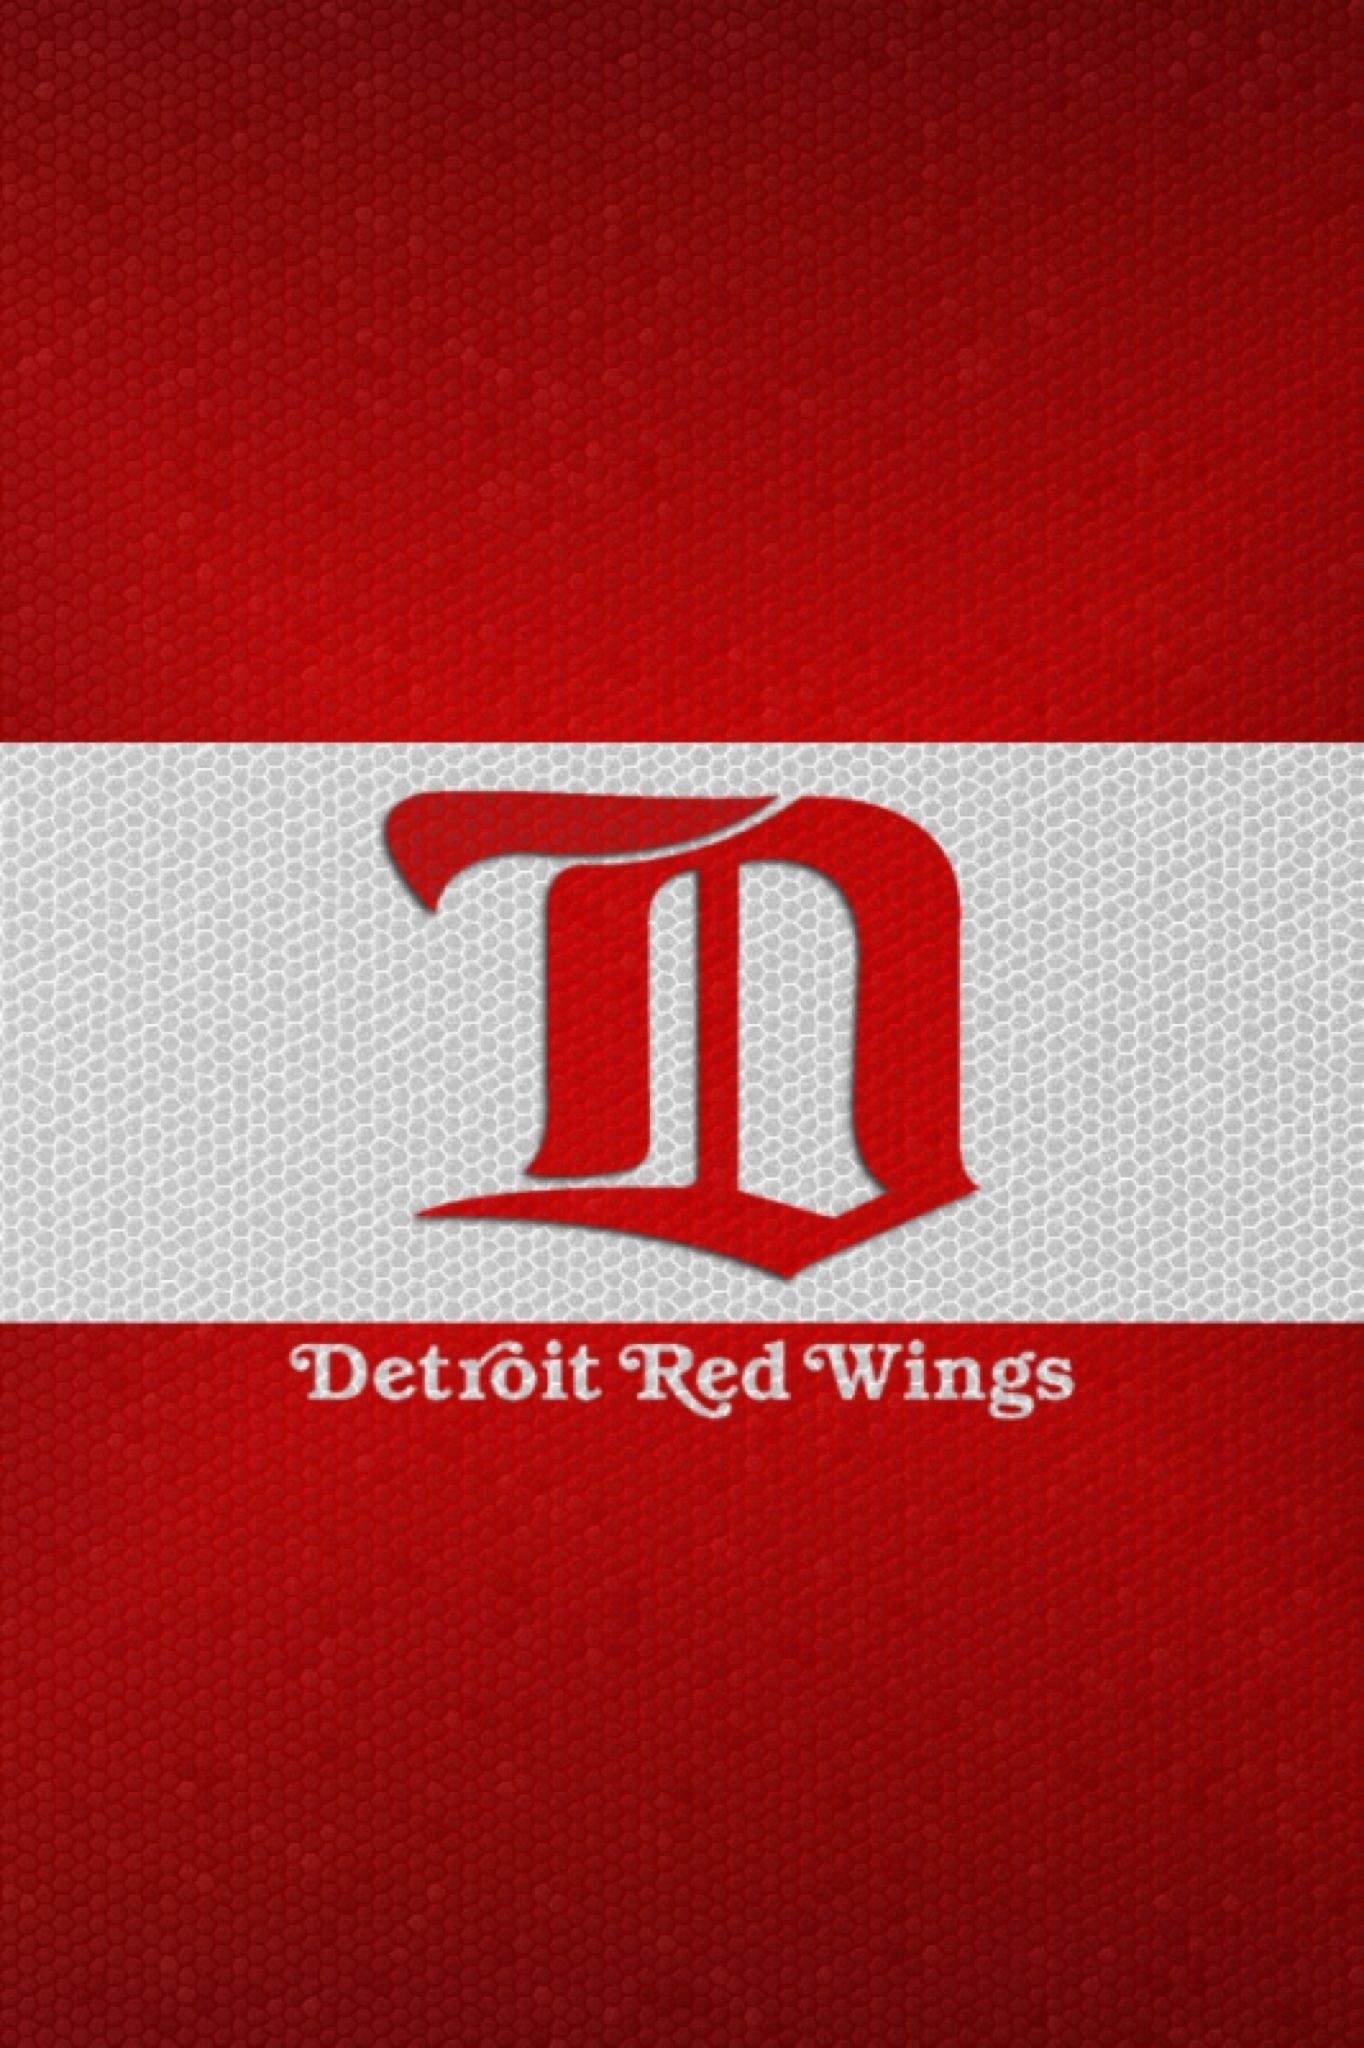 10 New Detroit Red Wings Iphone Wallpaper FULL HD 1080p For PC Desktop